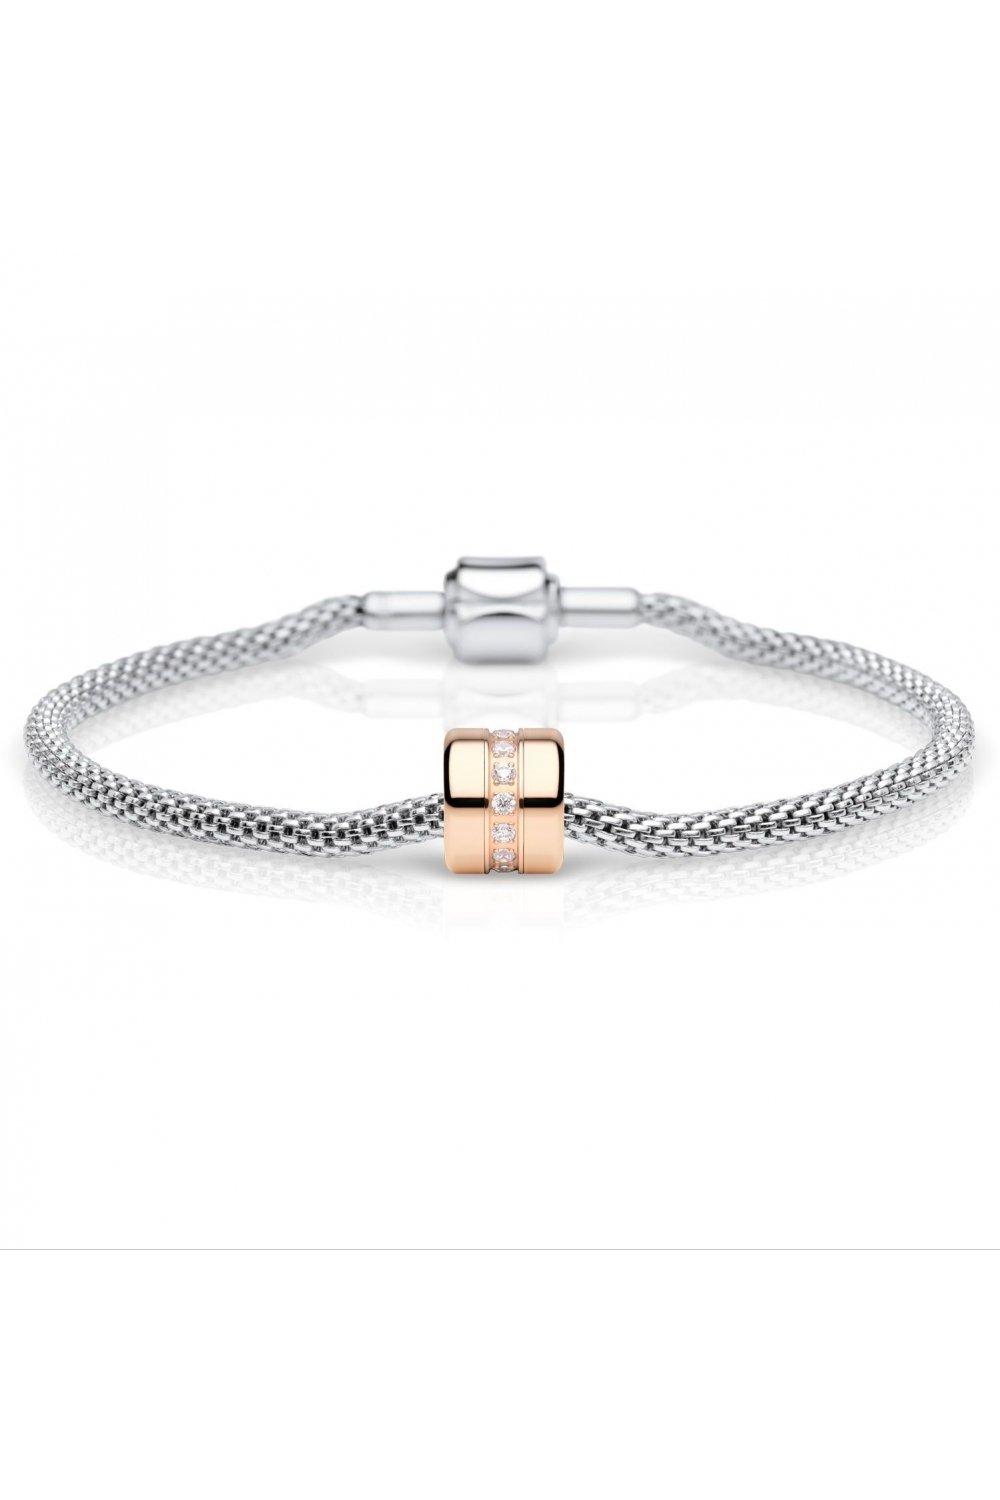 hope bracelet & charm set stainless steel bracelet - hop1-s-me-190